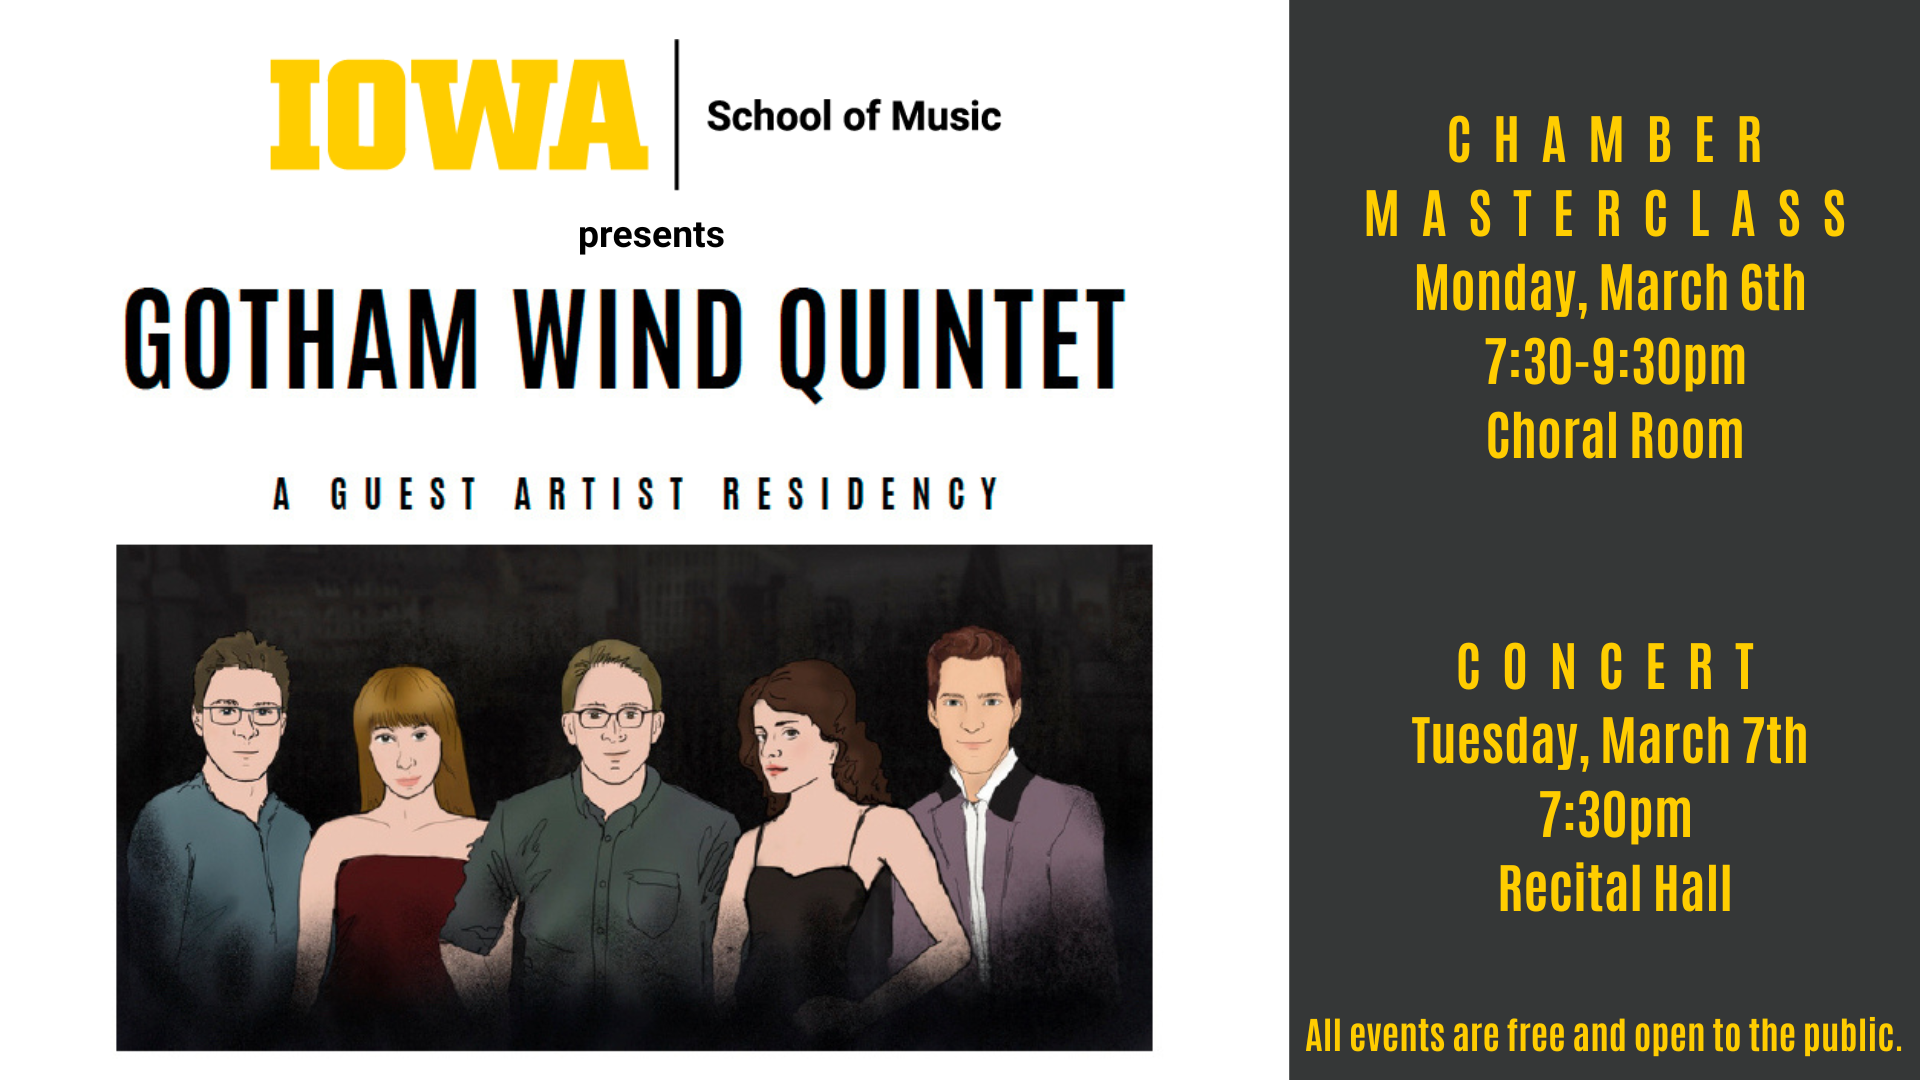 Gotham Wind Quartet concert on March 7